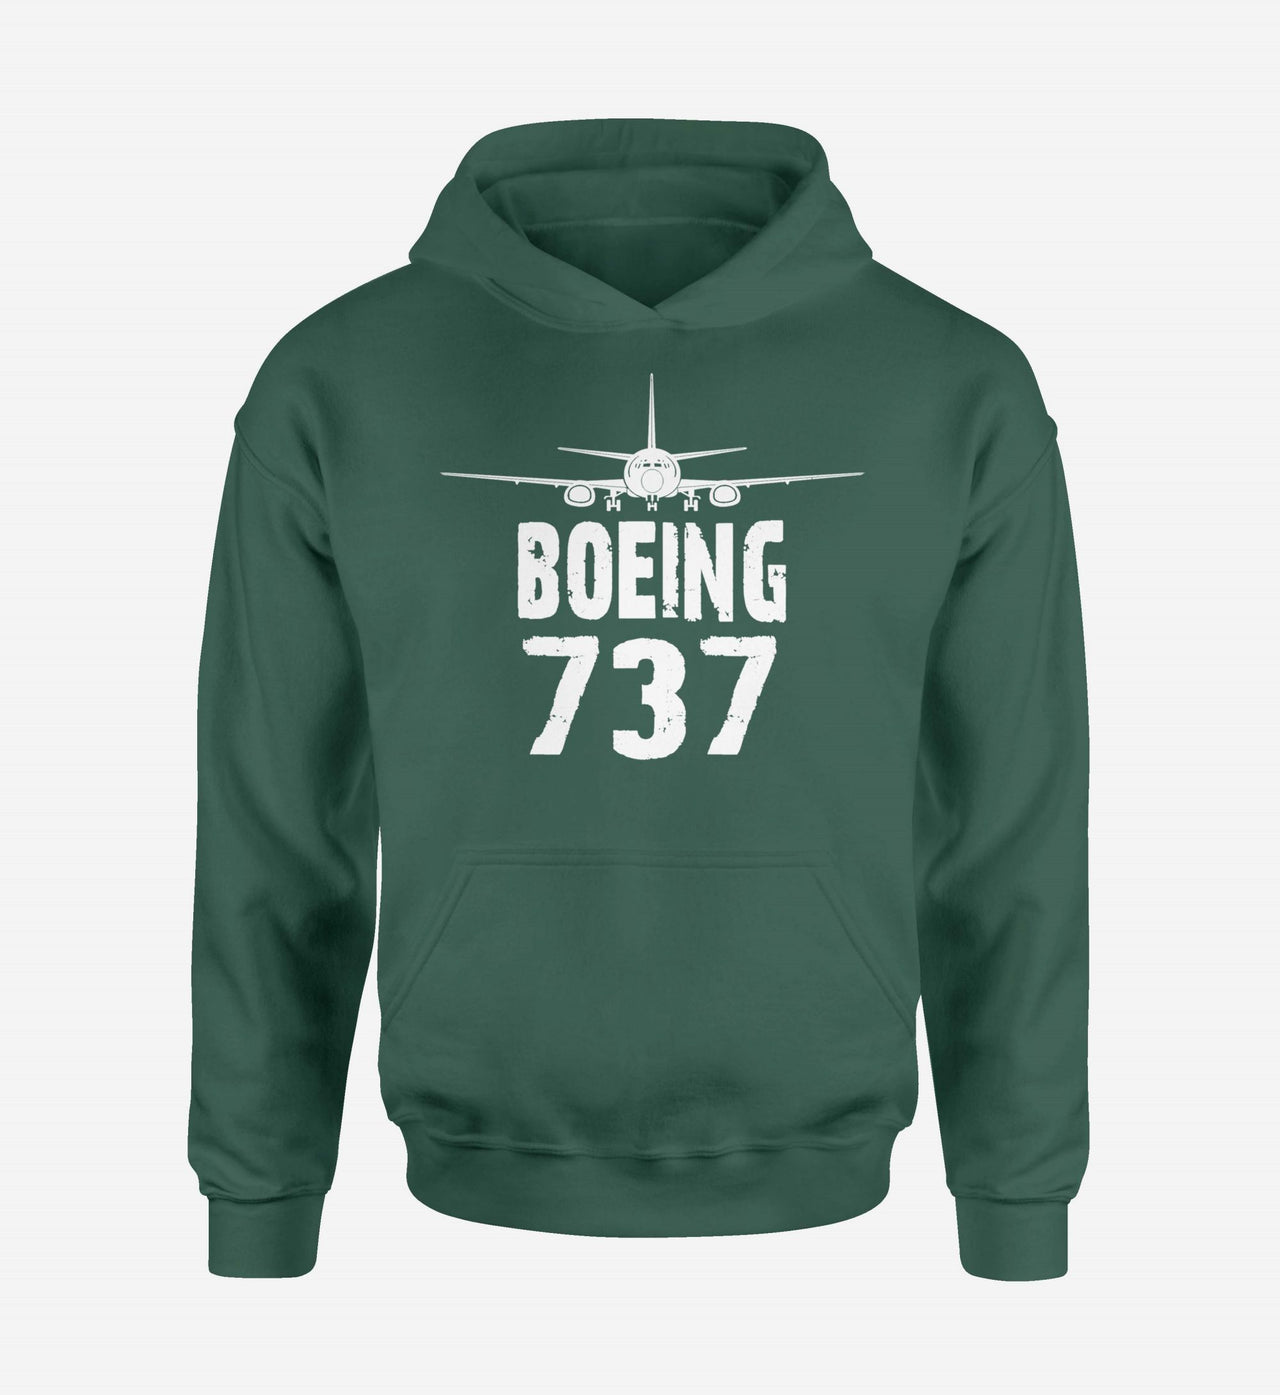 Boeing 737 & Plane Designed Hoodies